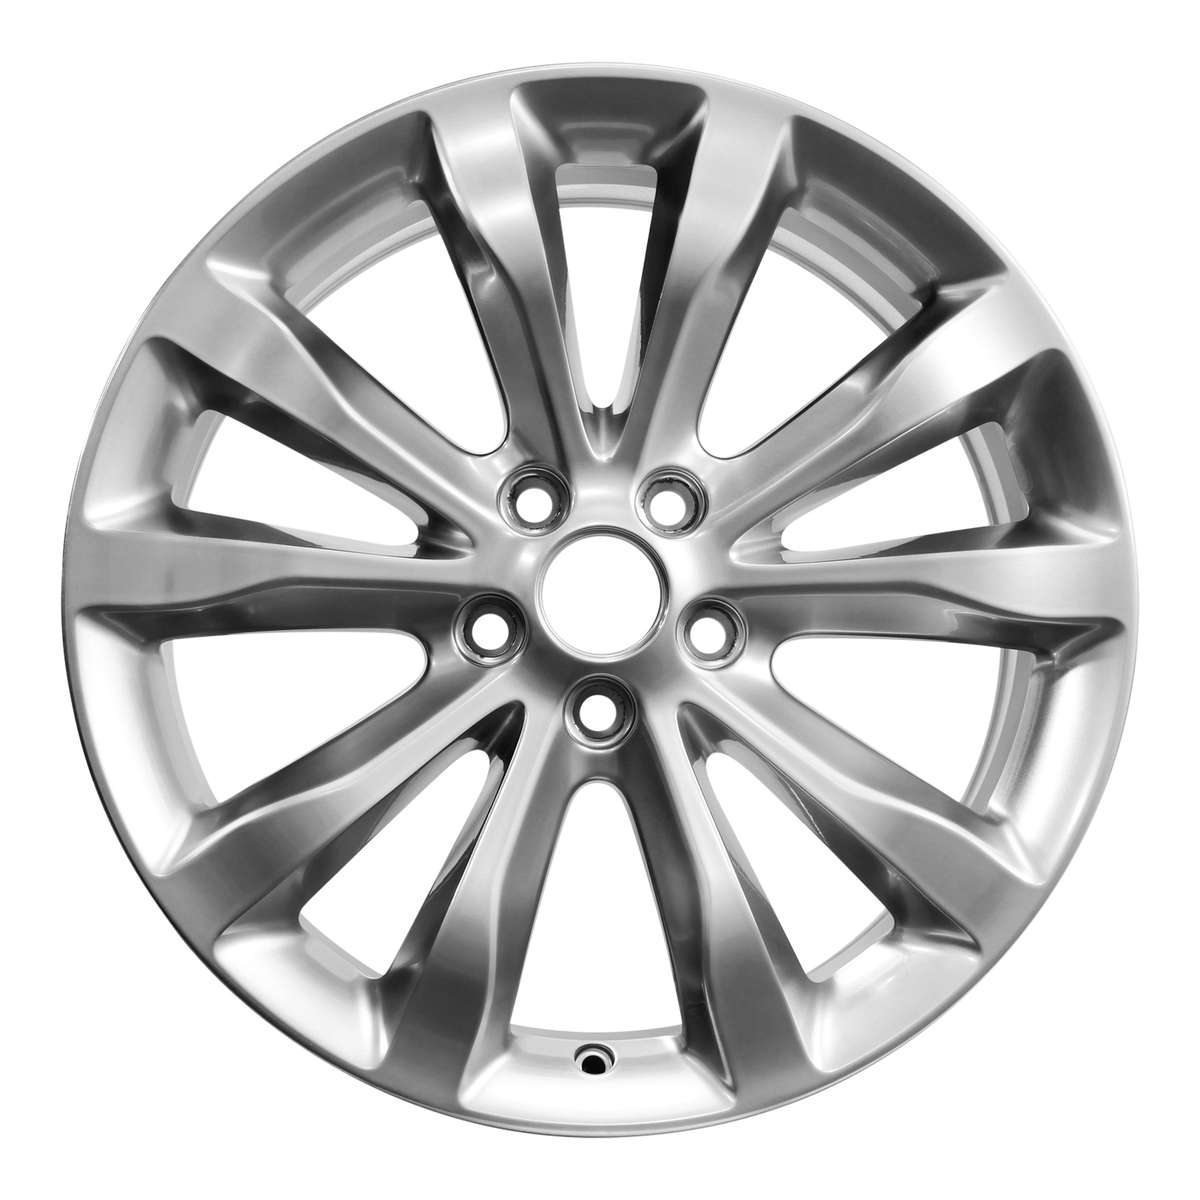 2018 Chrysler 300 19" OEM Wheel Rim W2538H